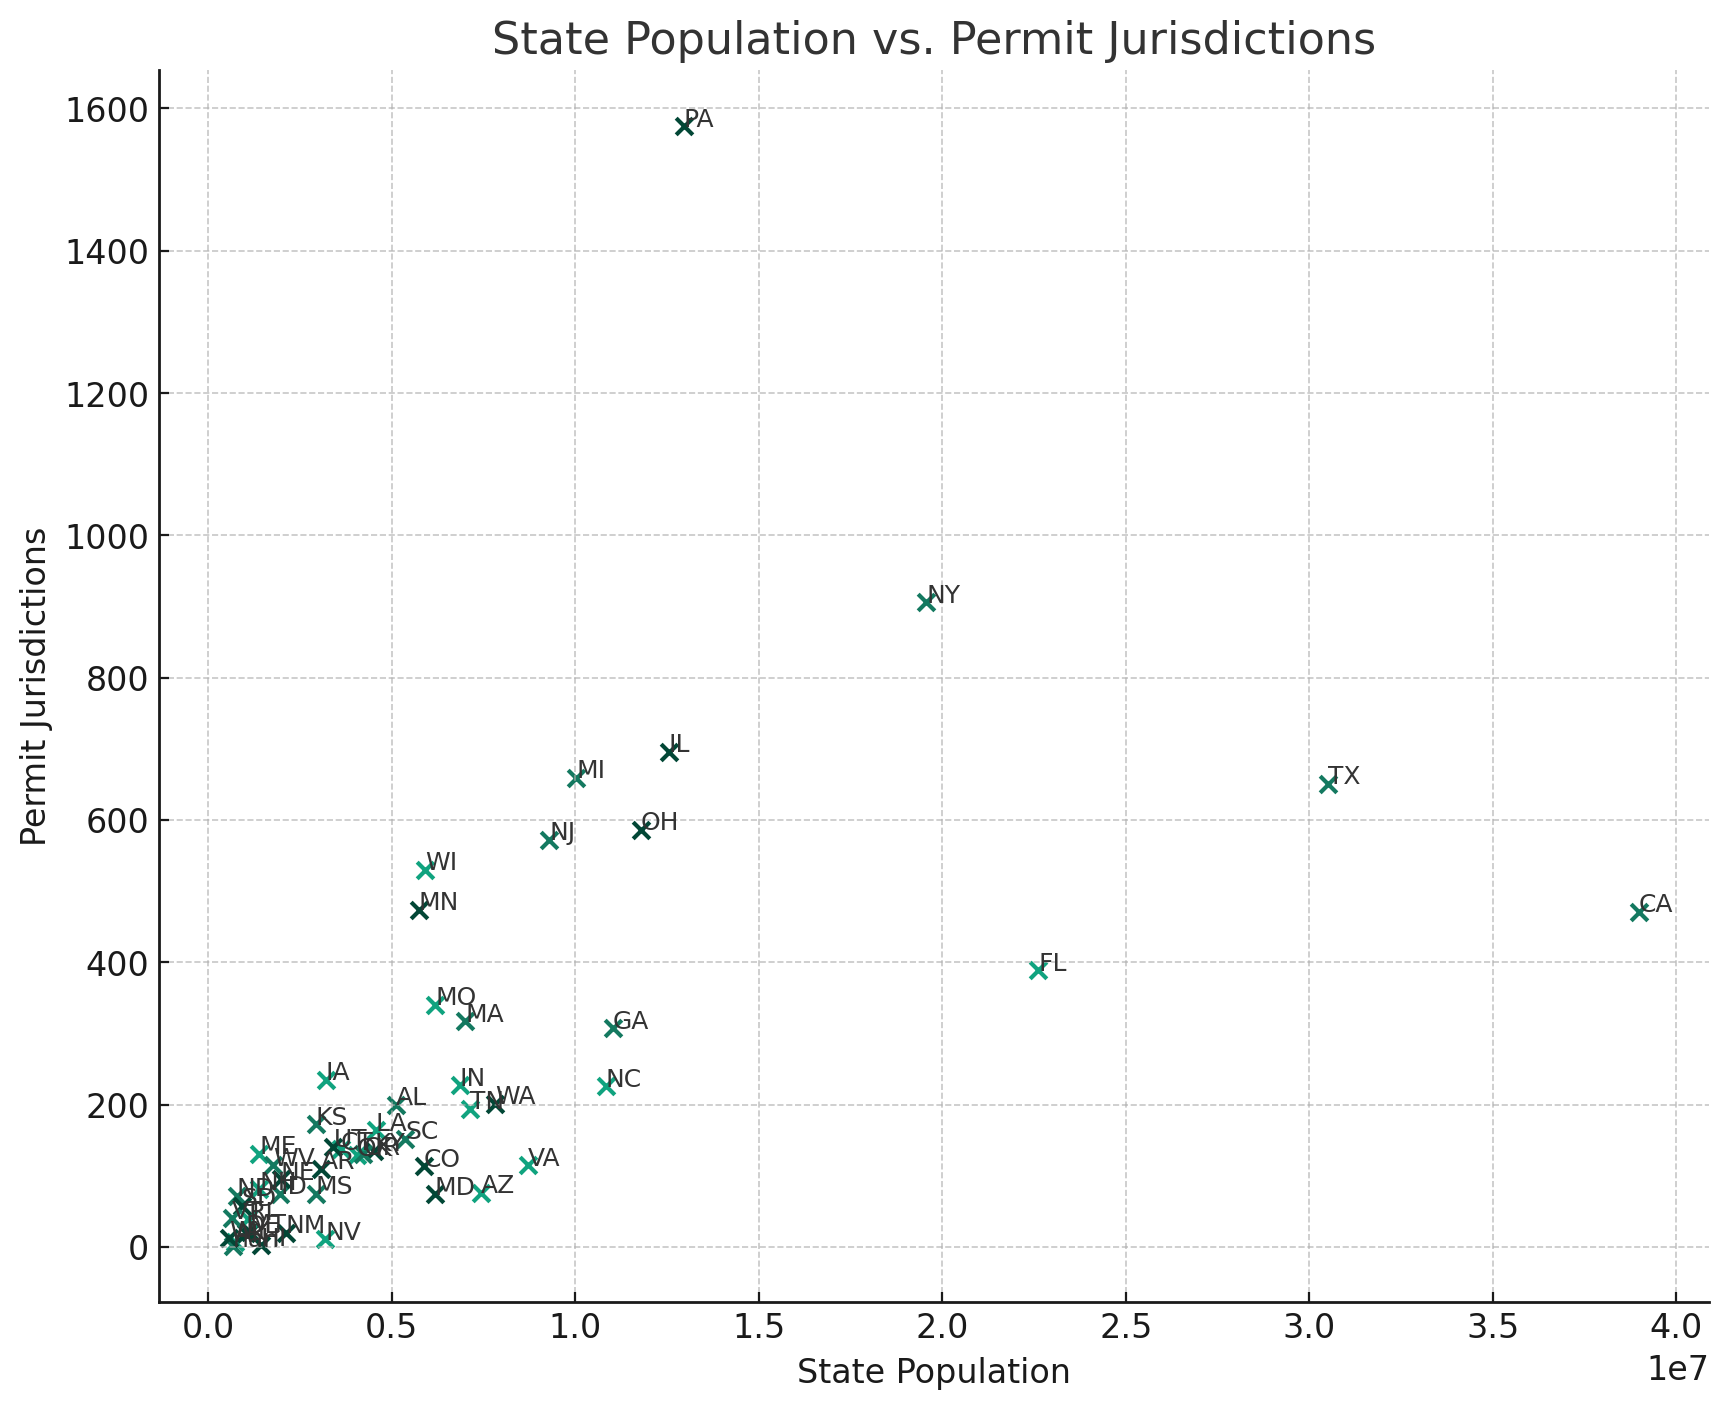 Population vs Jurisdiction Count